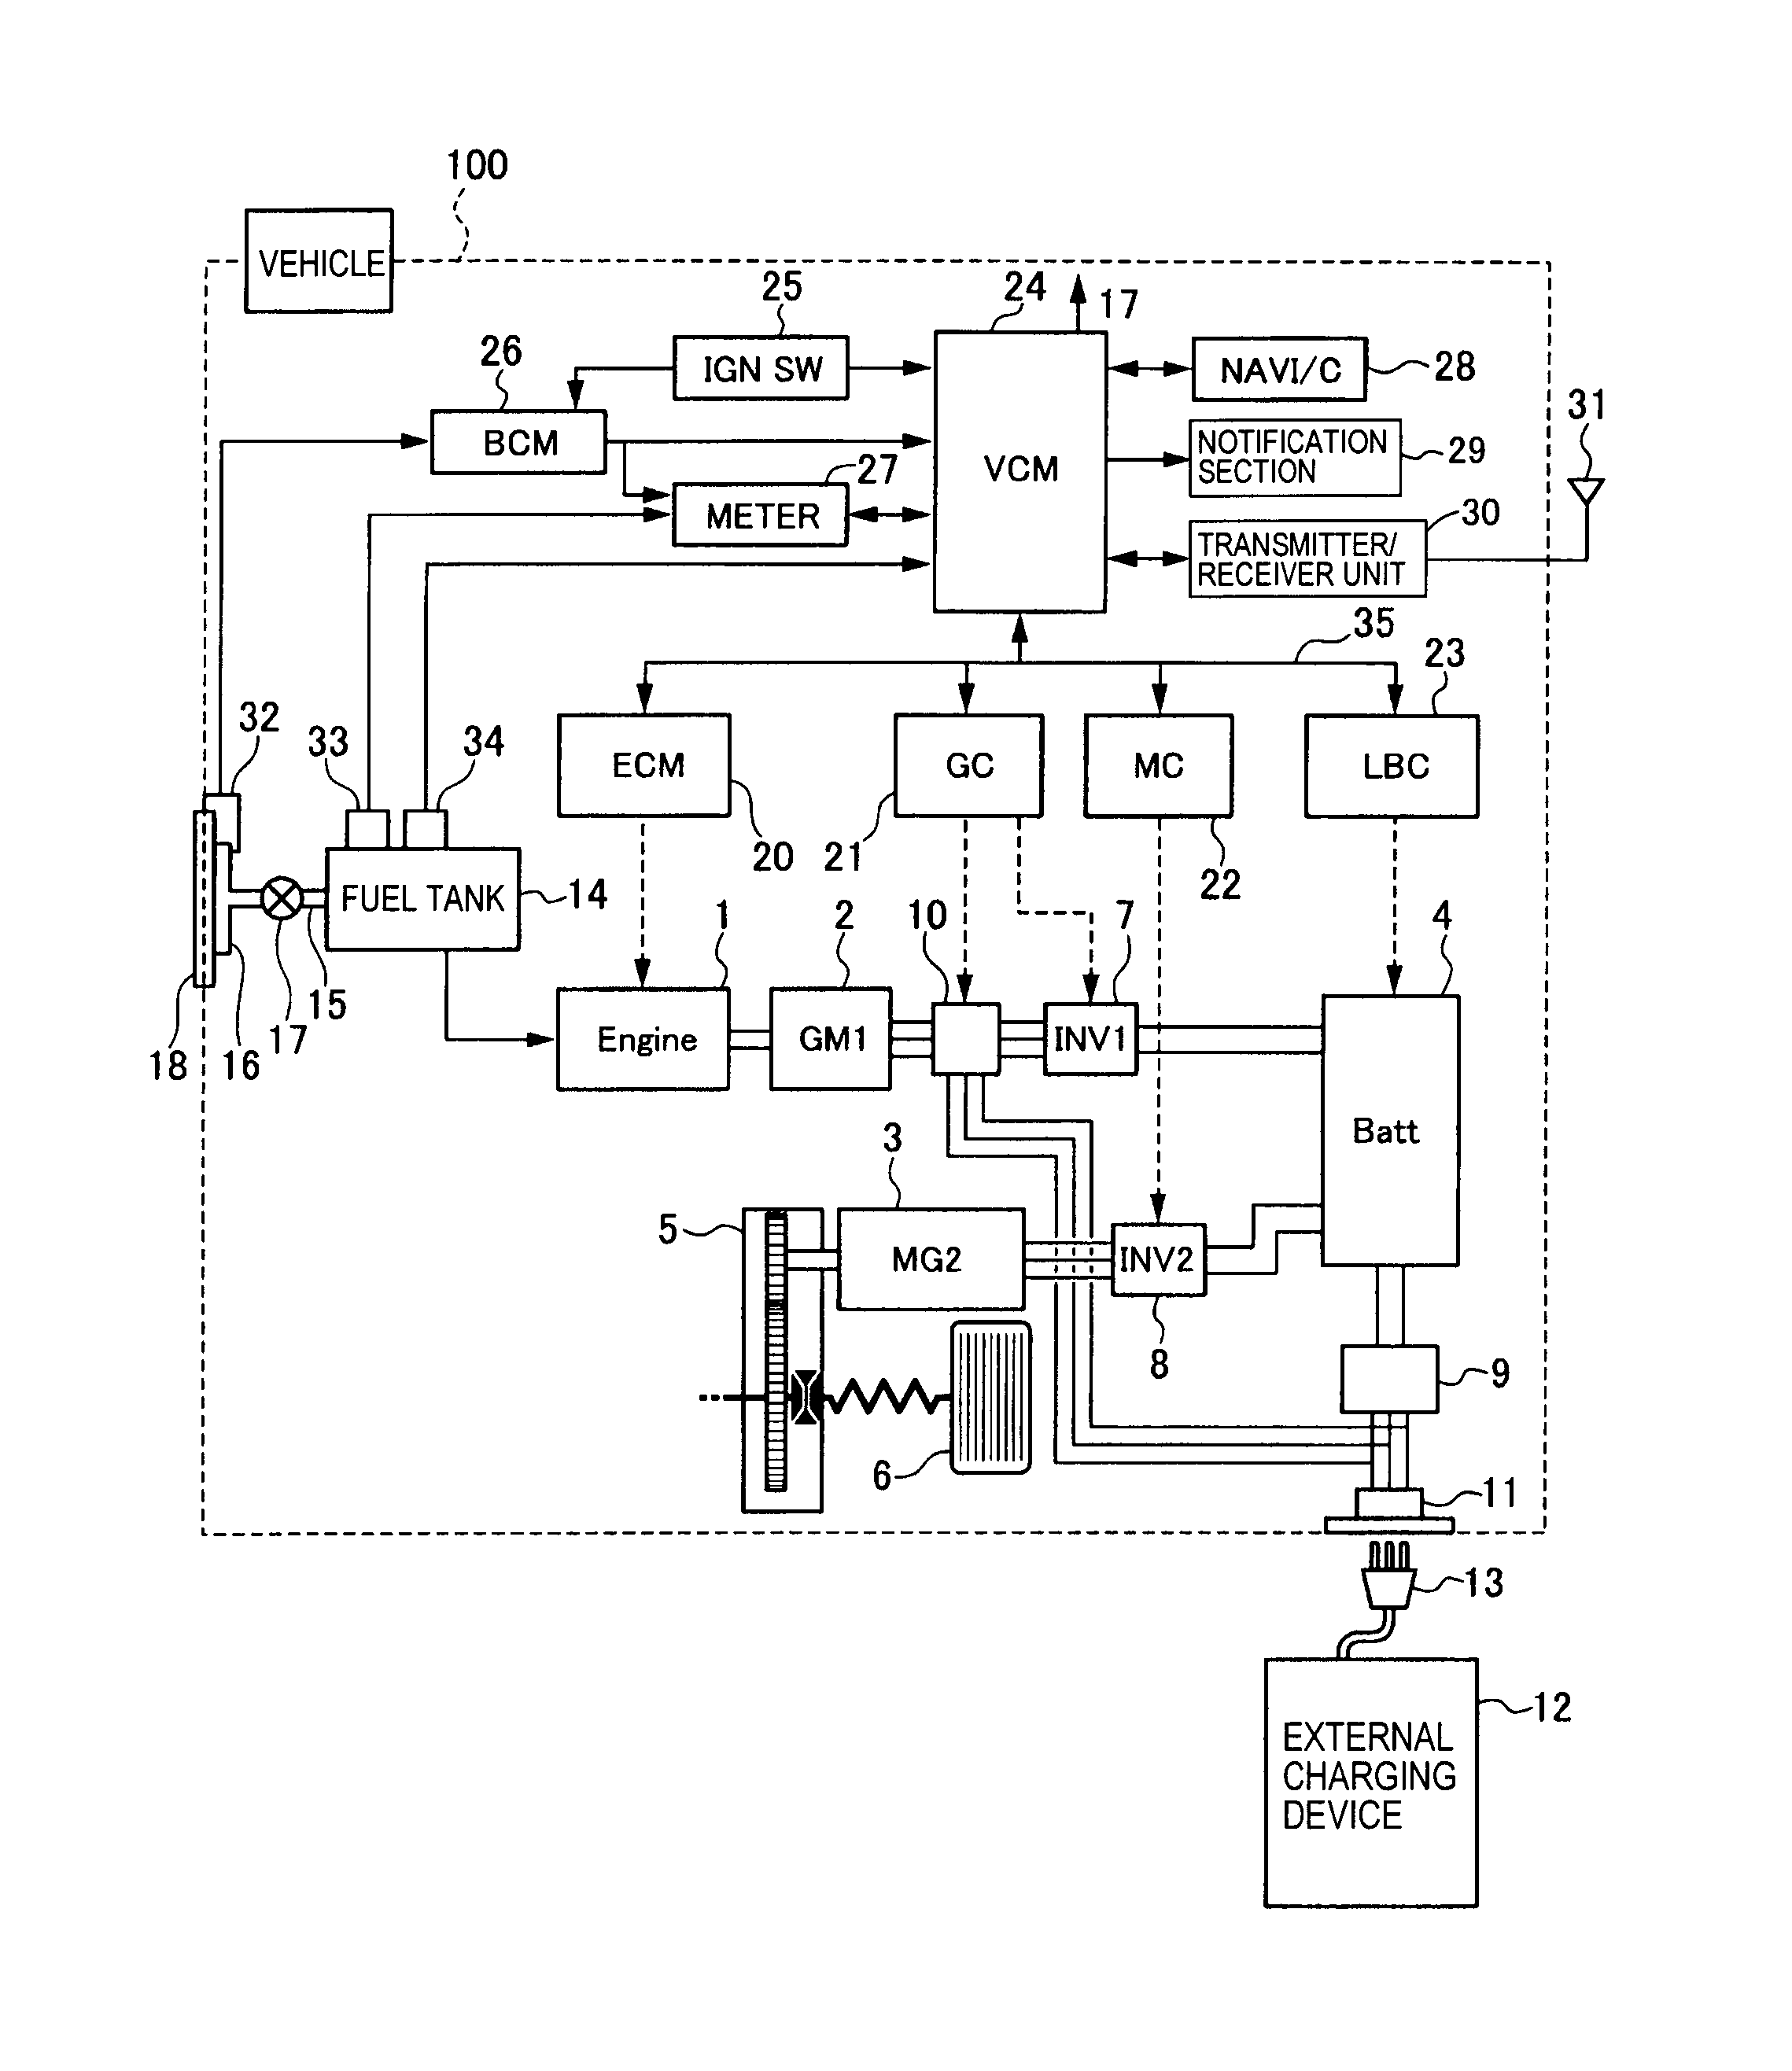 wiring diagram on a 1994 overland odessa diesel motorhome